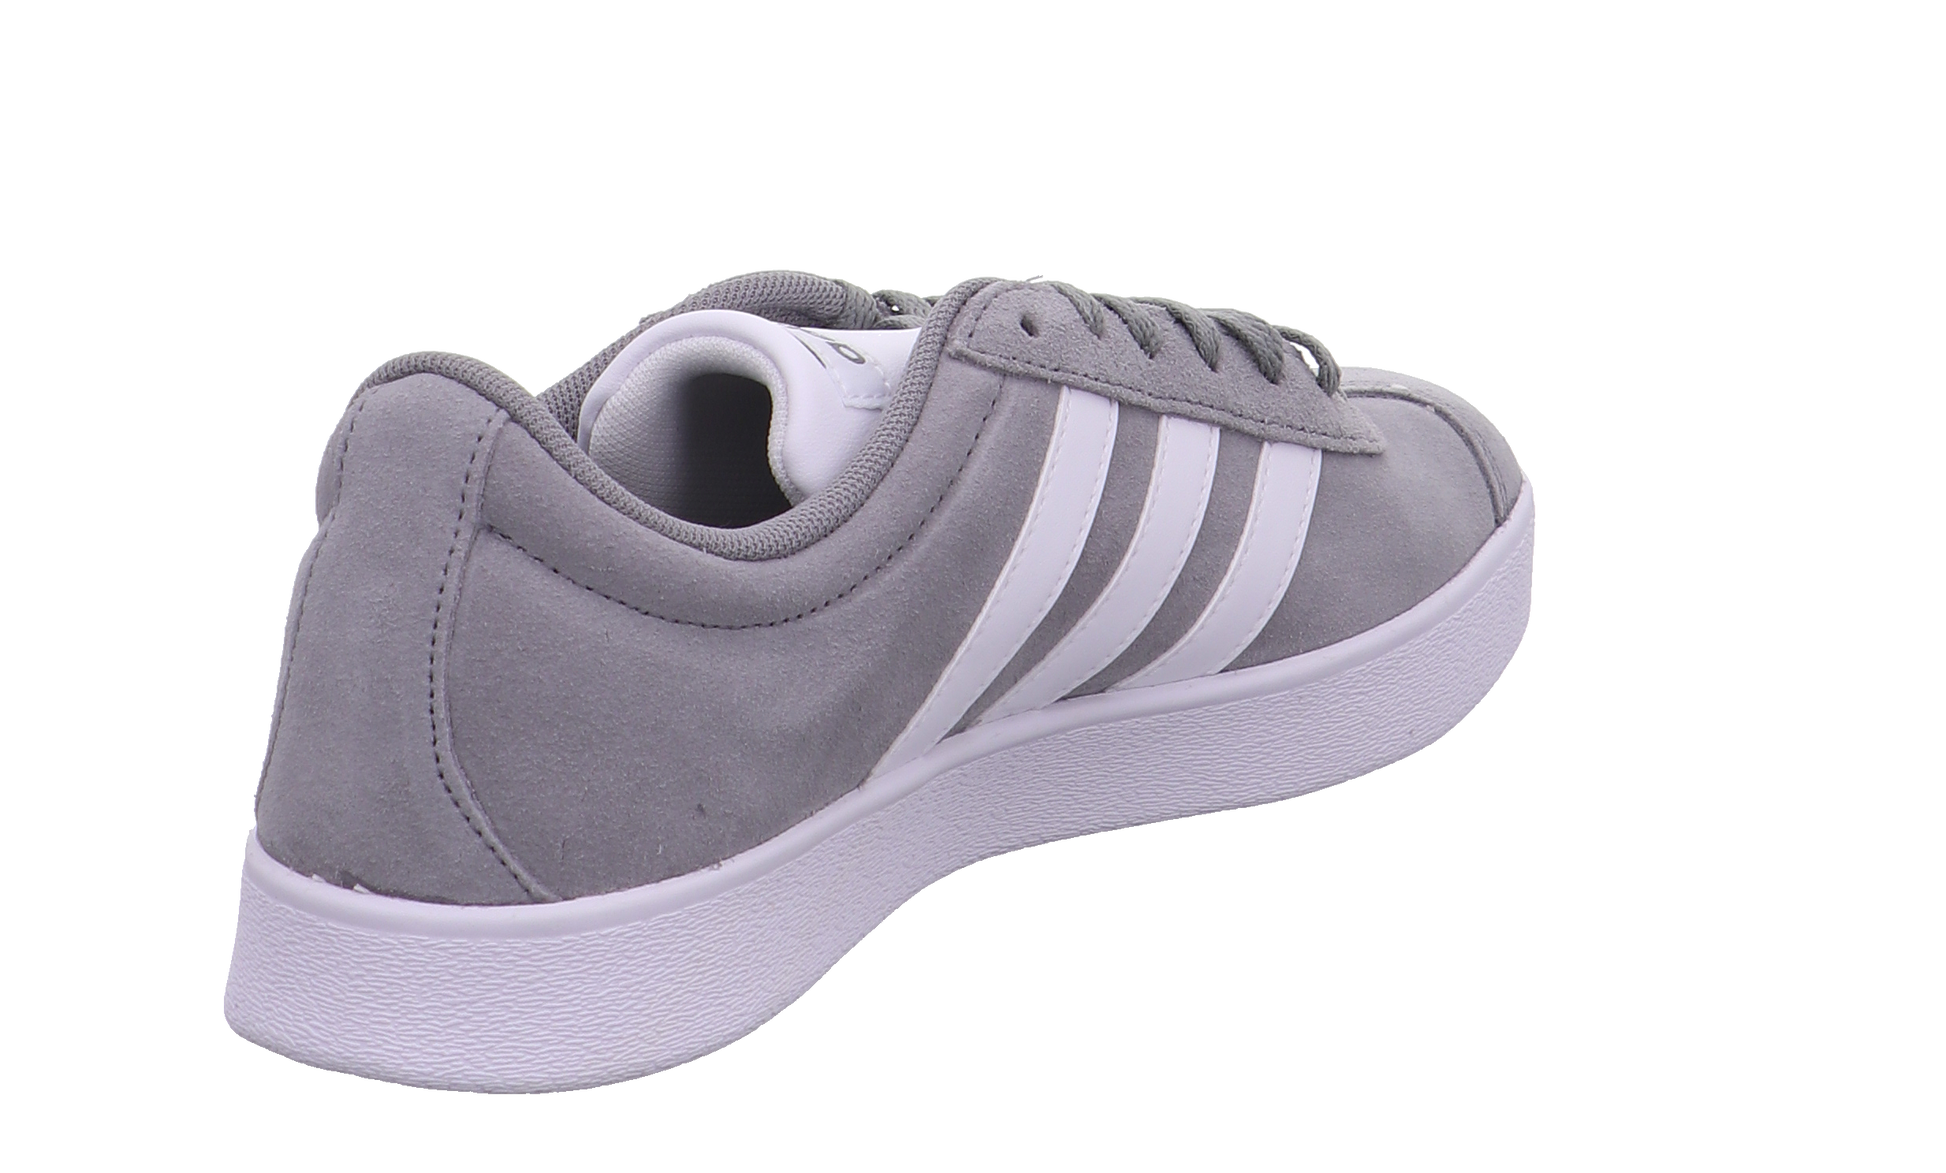 Adidas AG Sneaker grau kombi Bild5